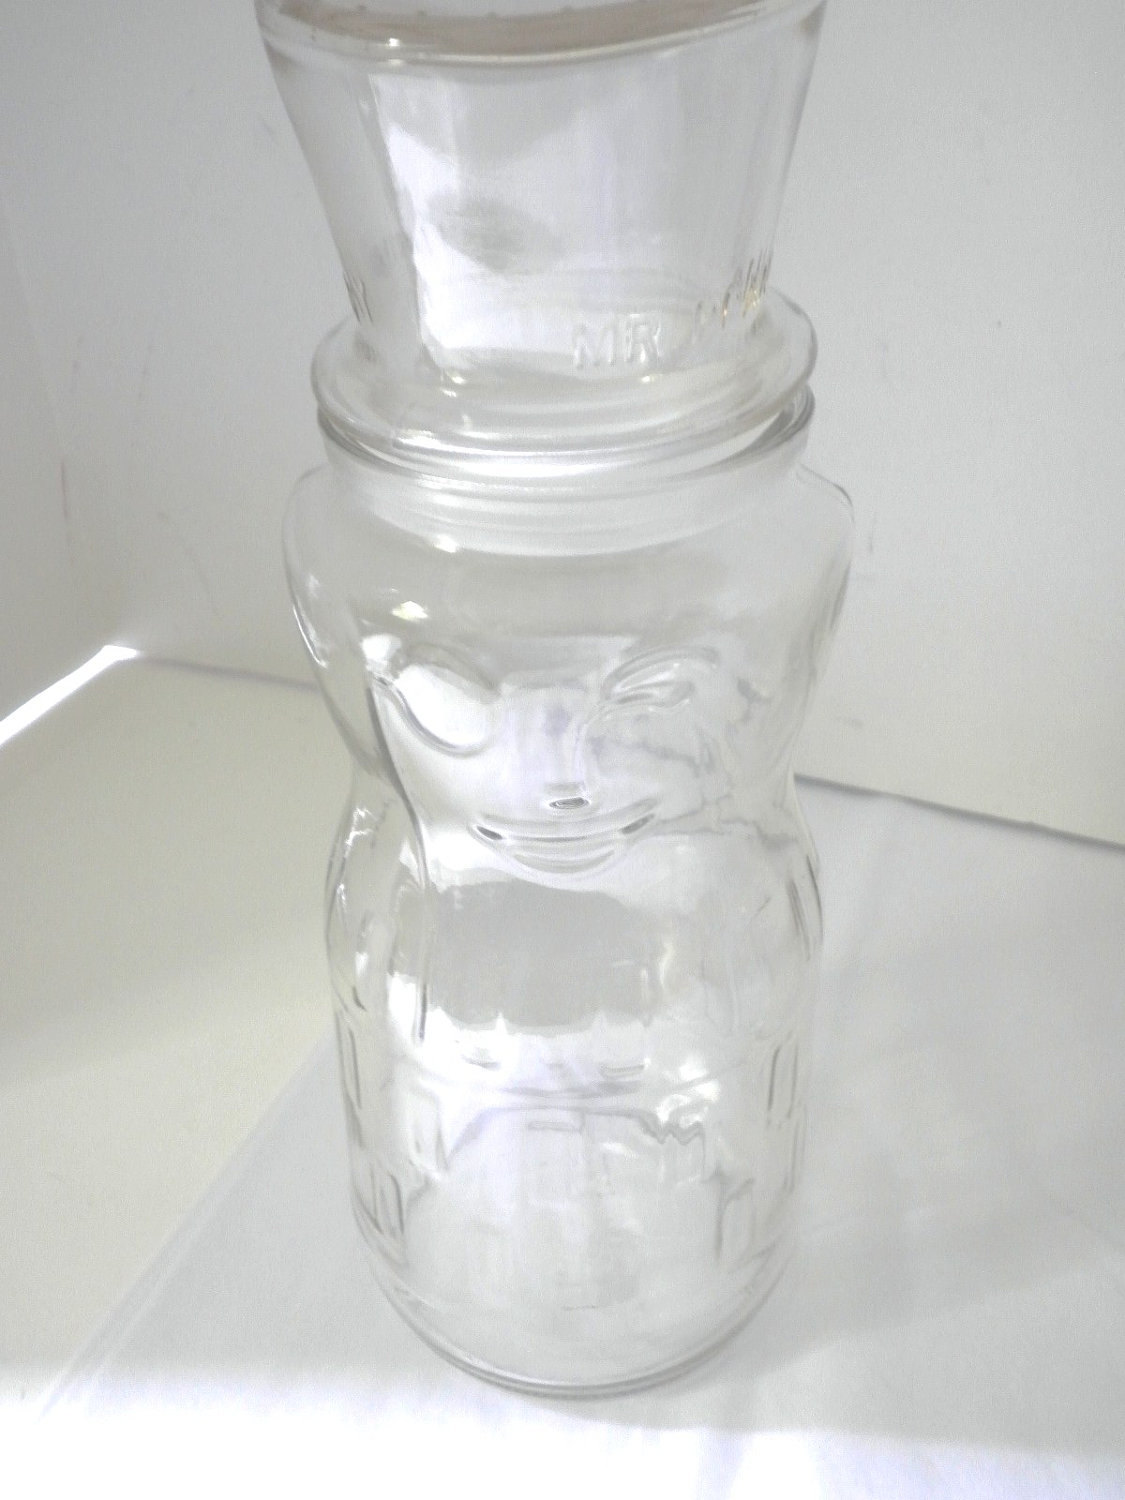 Mr Peanut 75th Anniversary Collectible Clear Glass Jar1125 x 1500